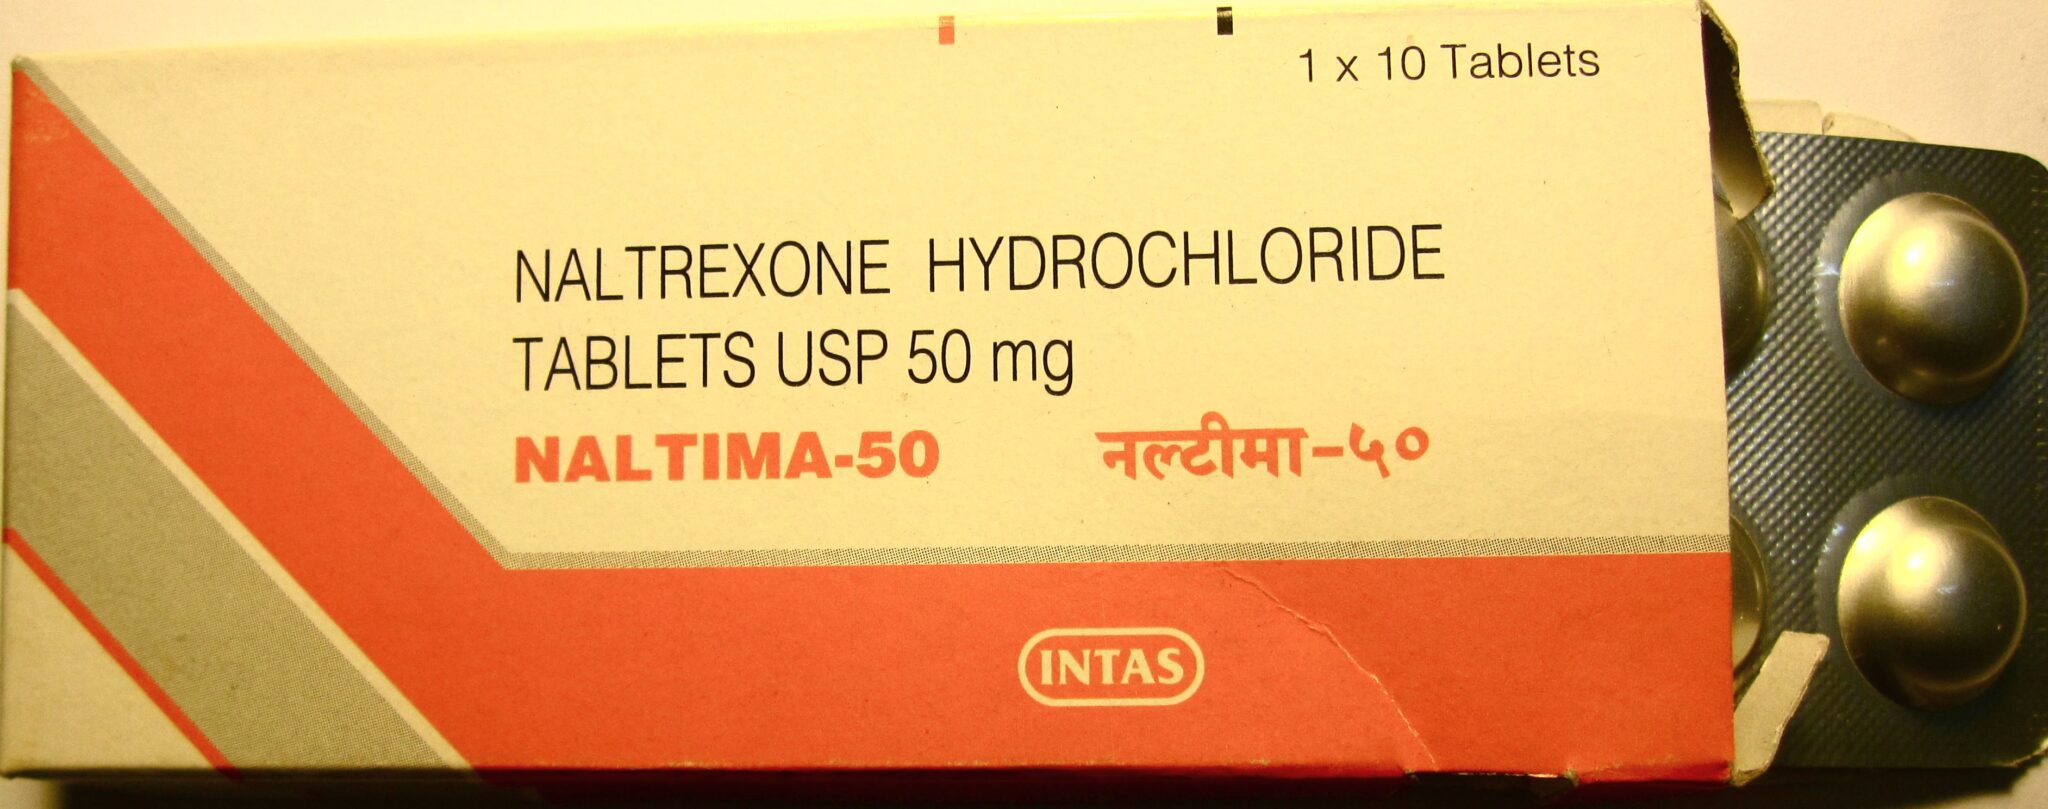 Naltrexone_Hydrochloride